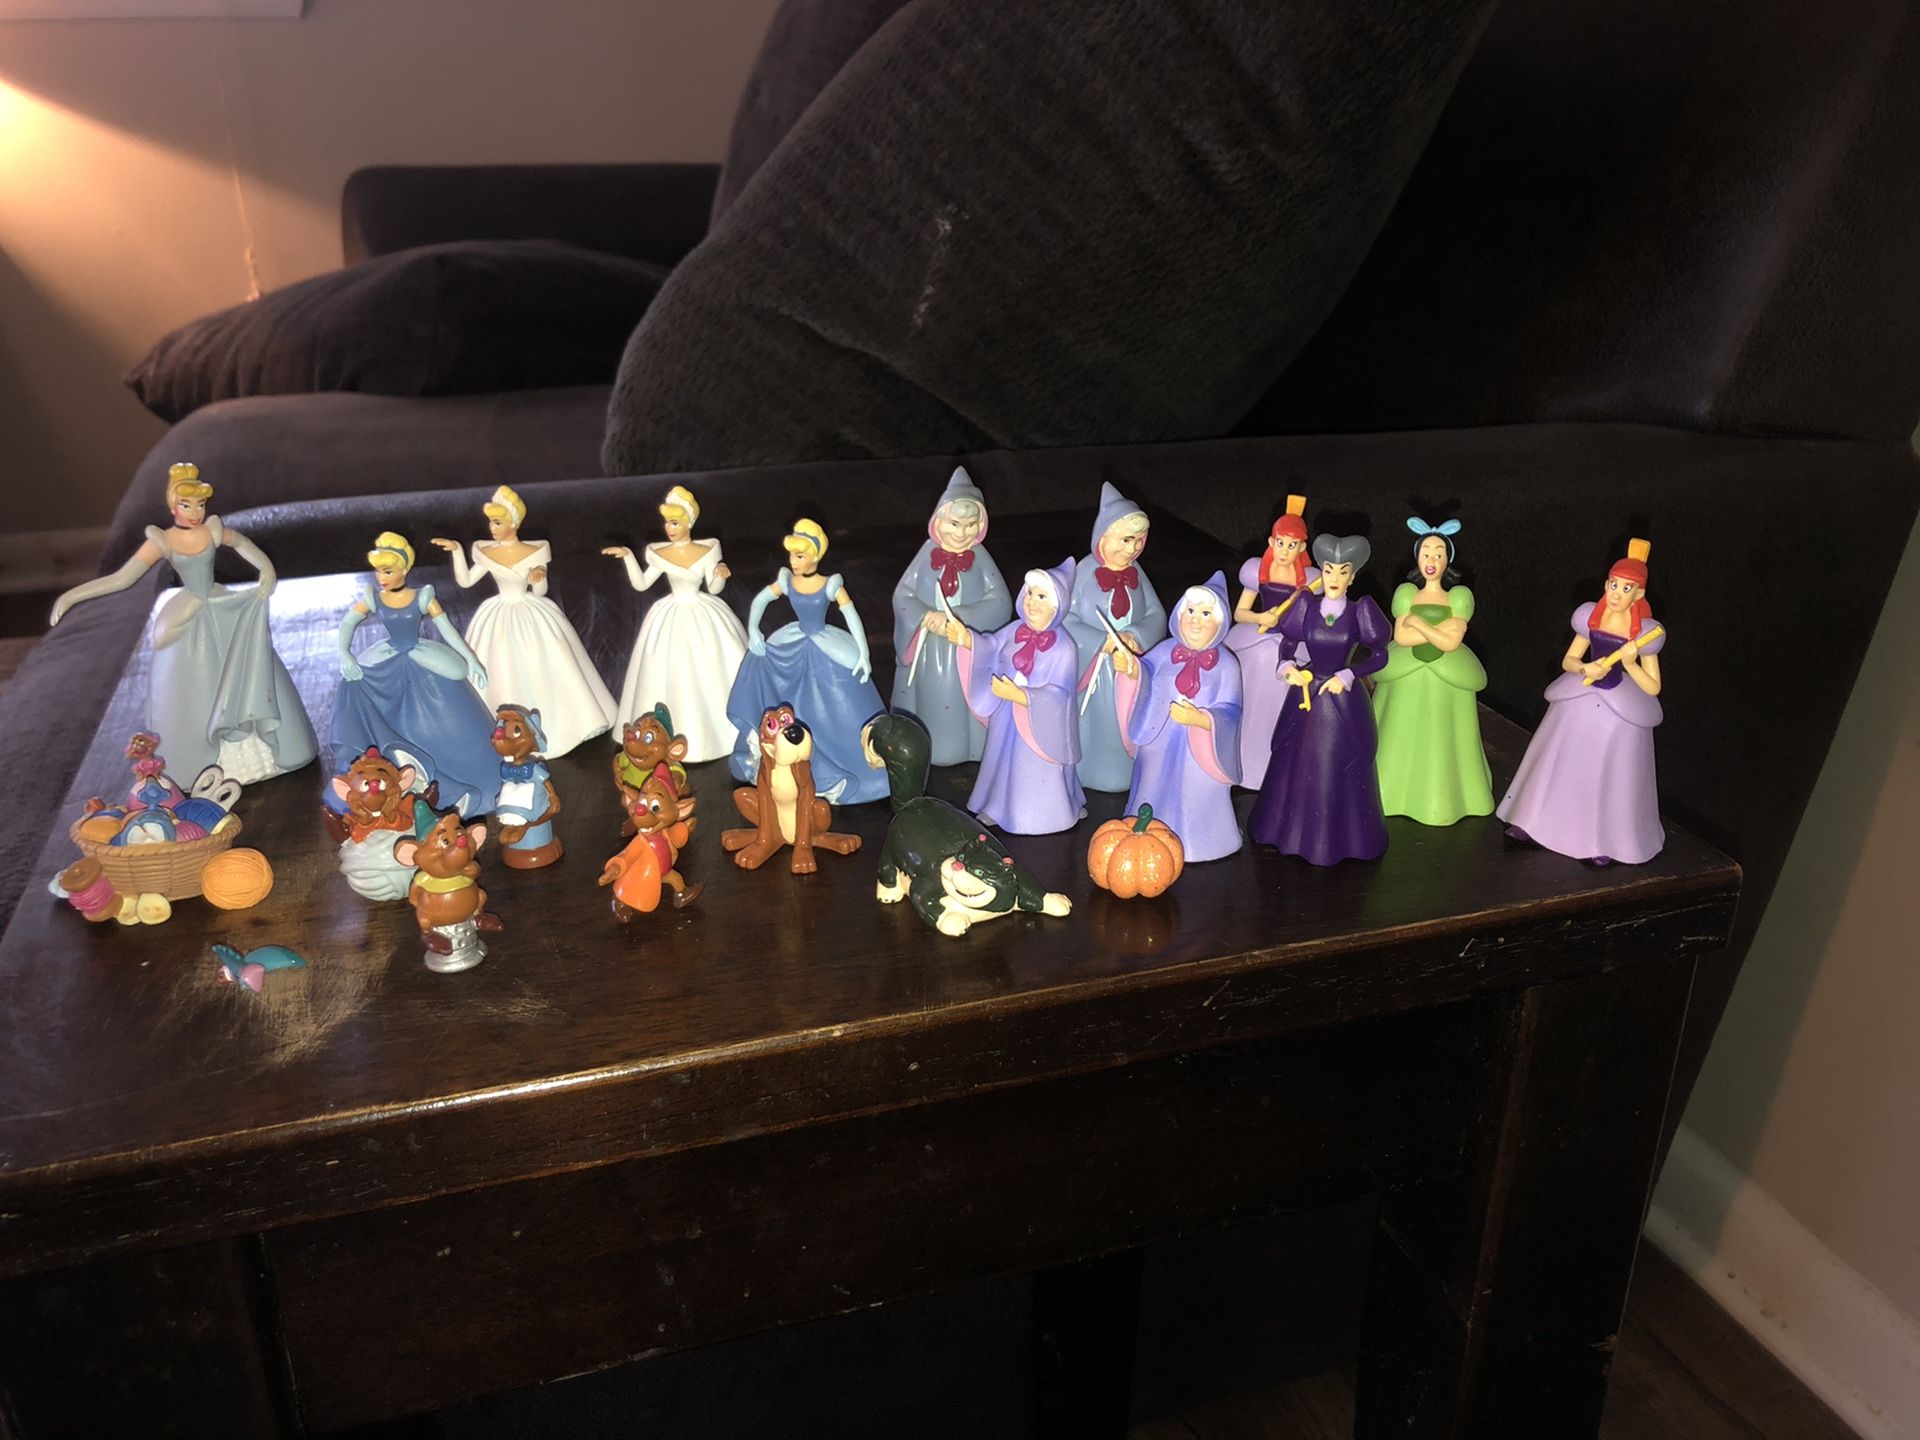 Disney’s Cinderella figures